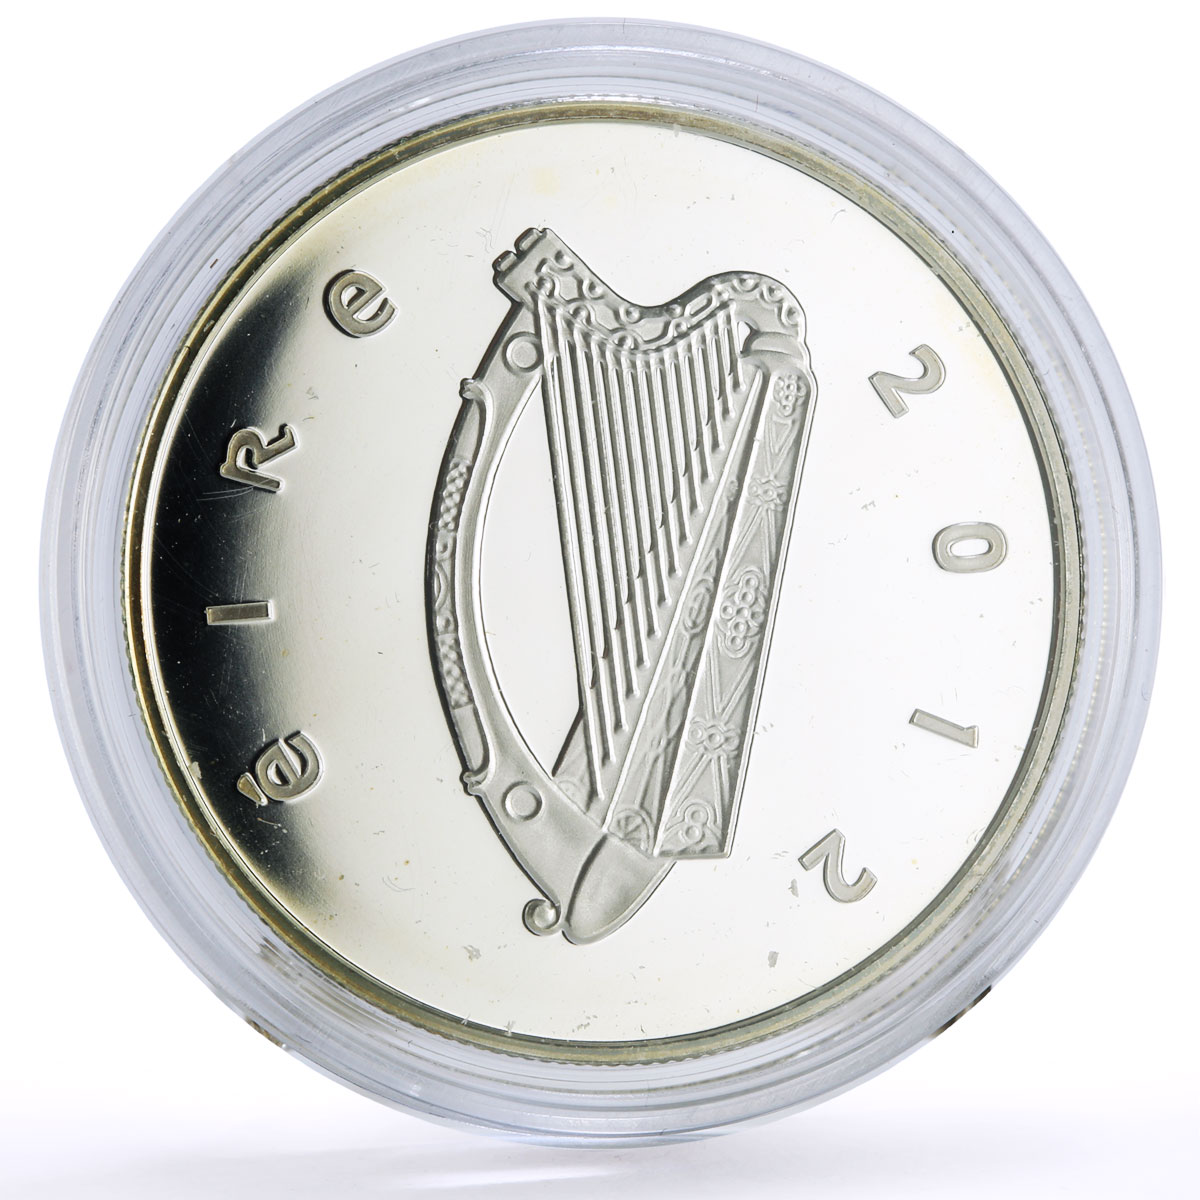 Ireland 15 euro Irish Coinage Symbols Wolfhound Dogs Animals silver coin 2012